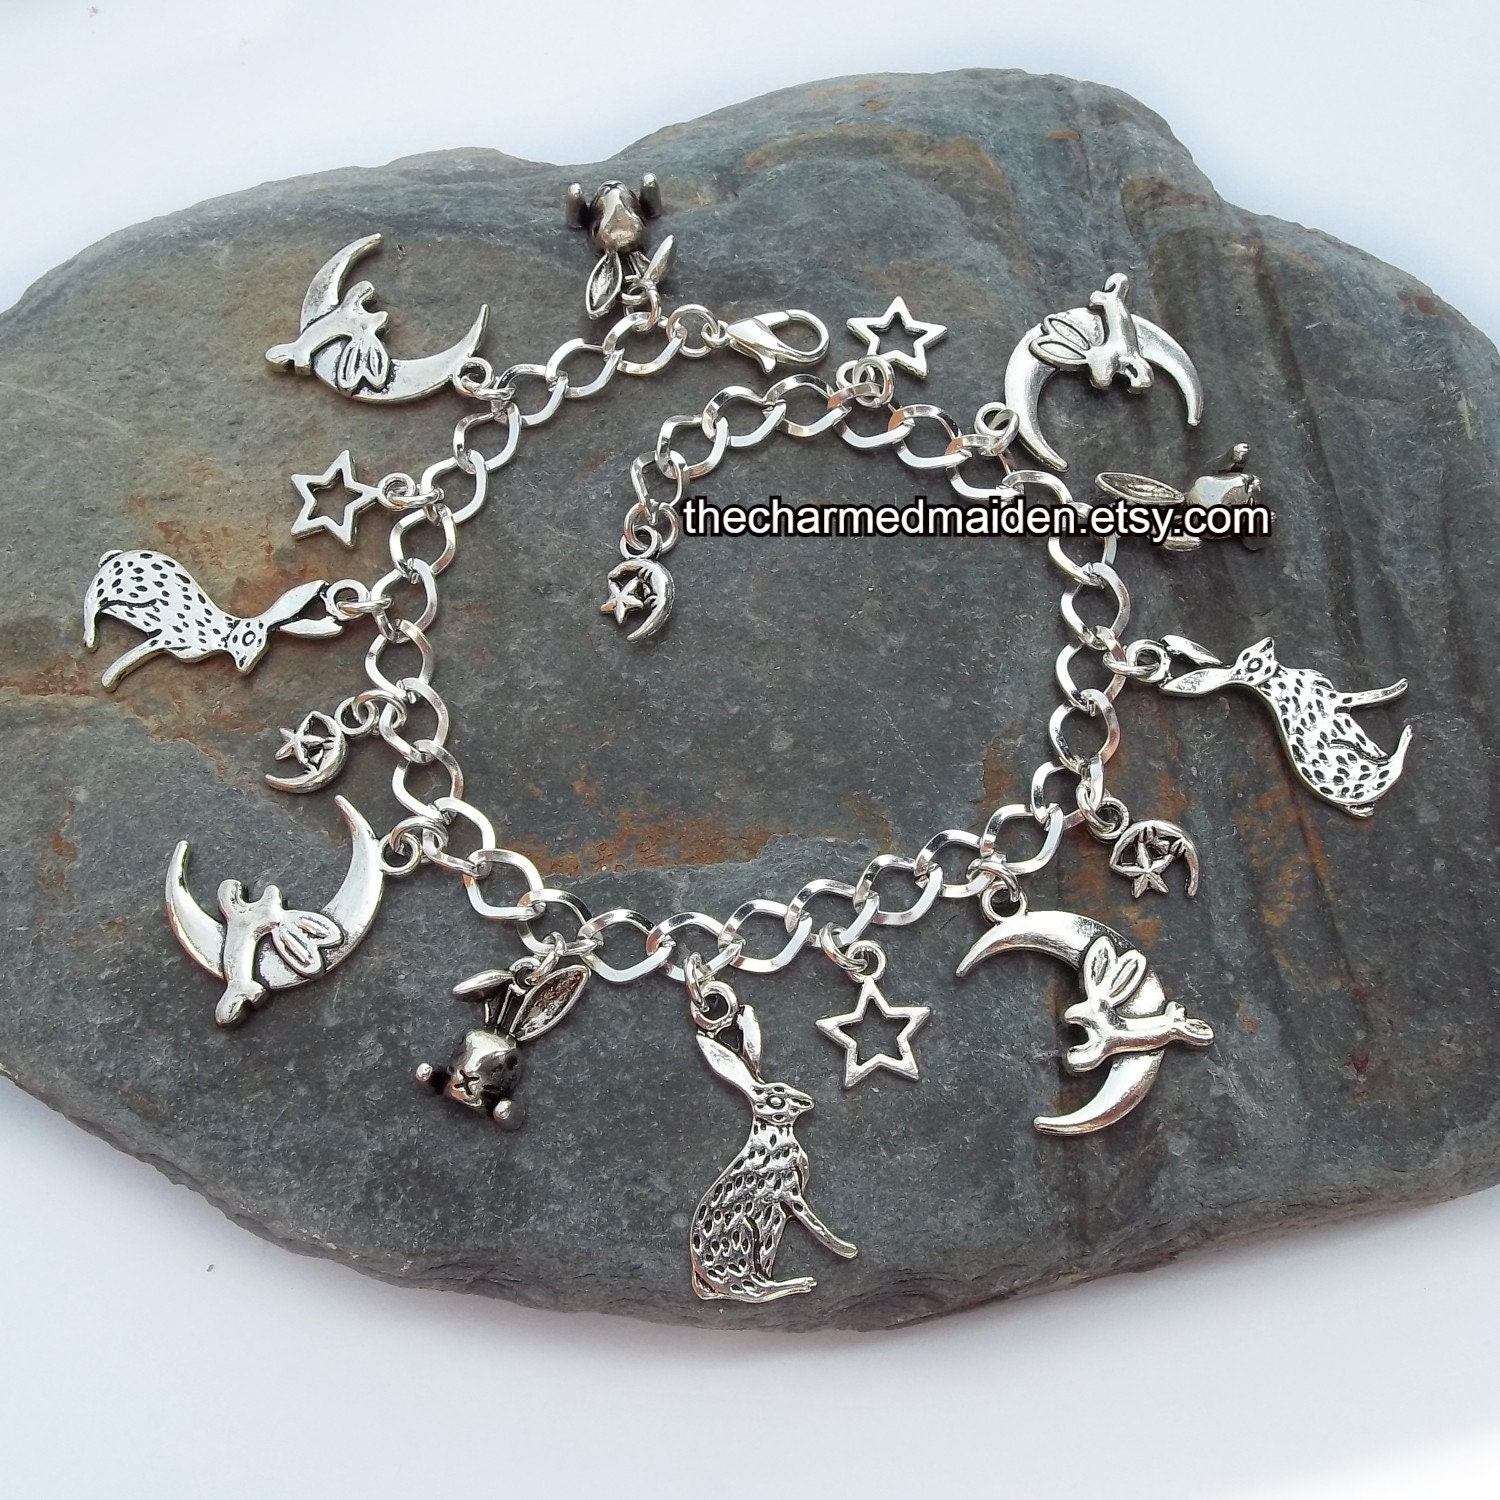 Woodland Creature Charm Bracelet - Sterling Silver Bracelet with